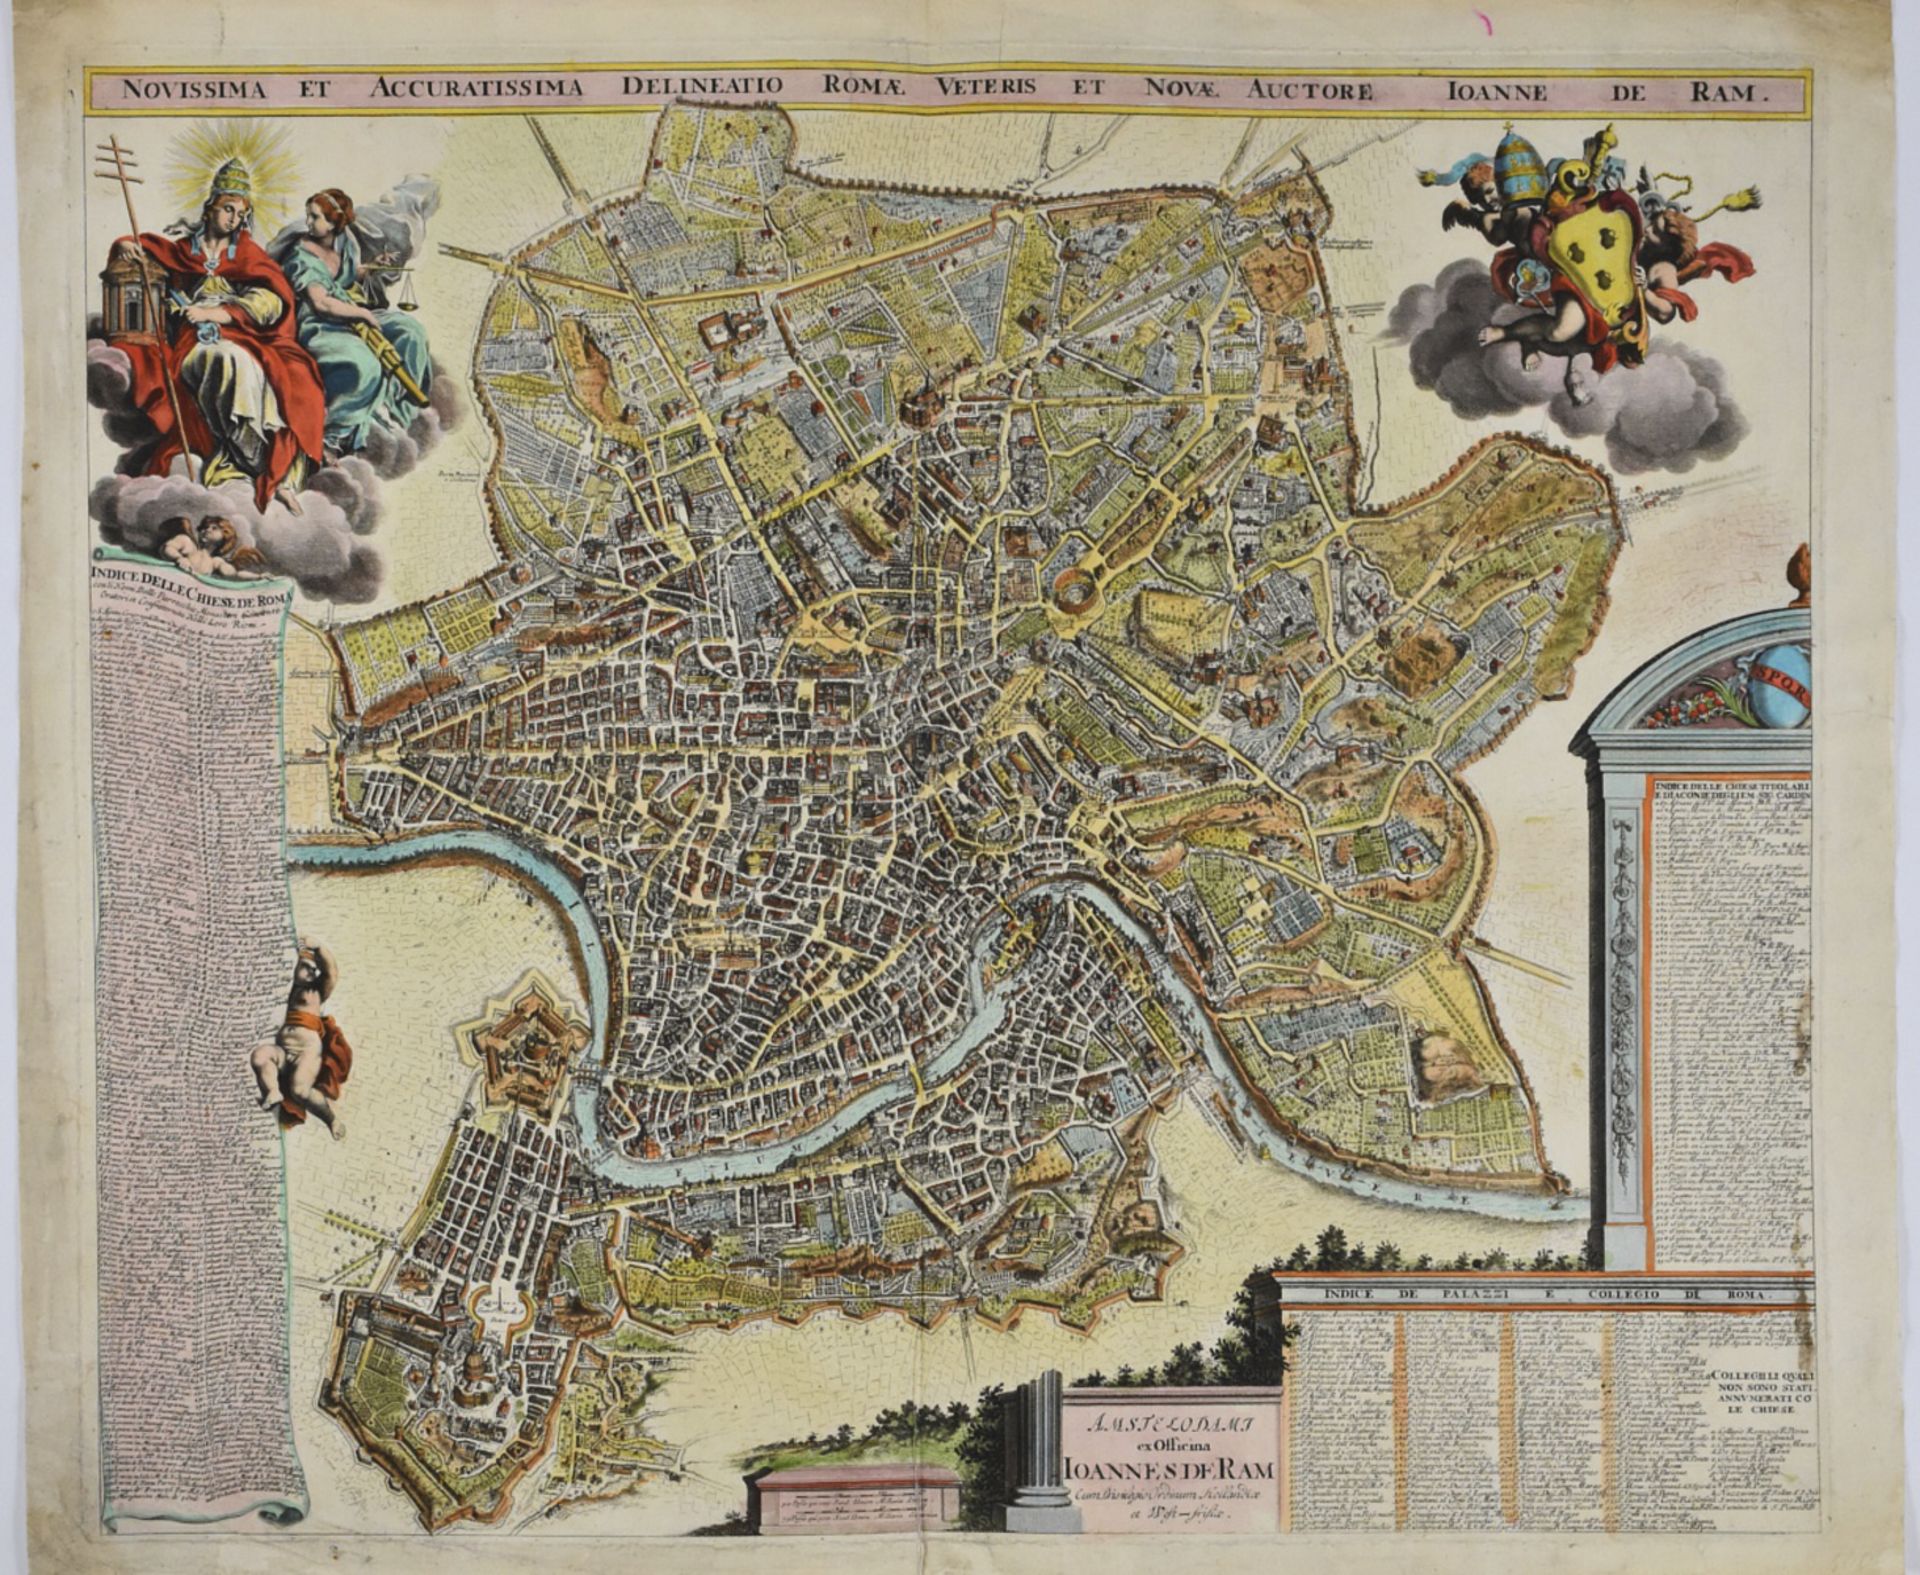 Joannes de Ram Map of Rome 1696